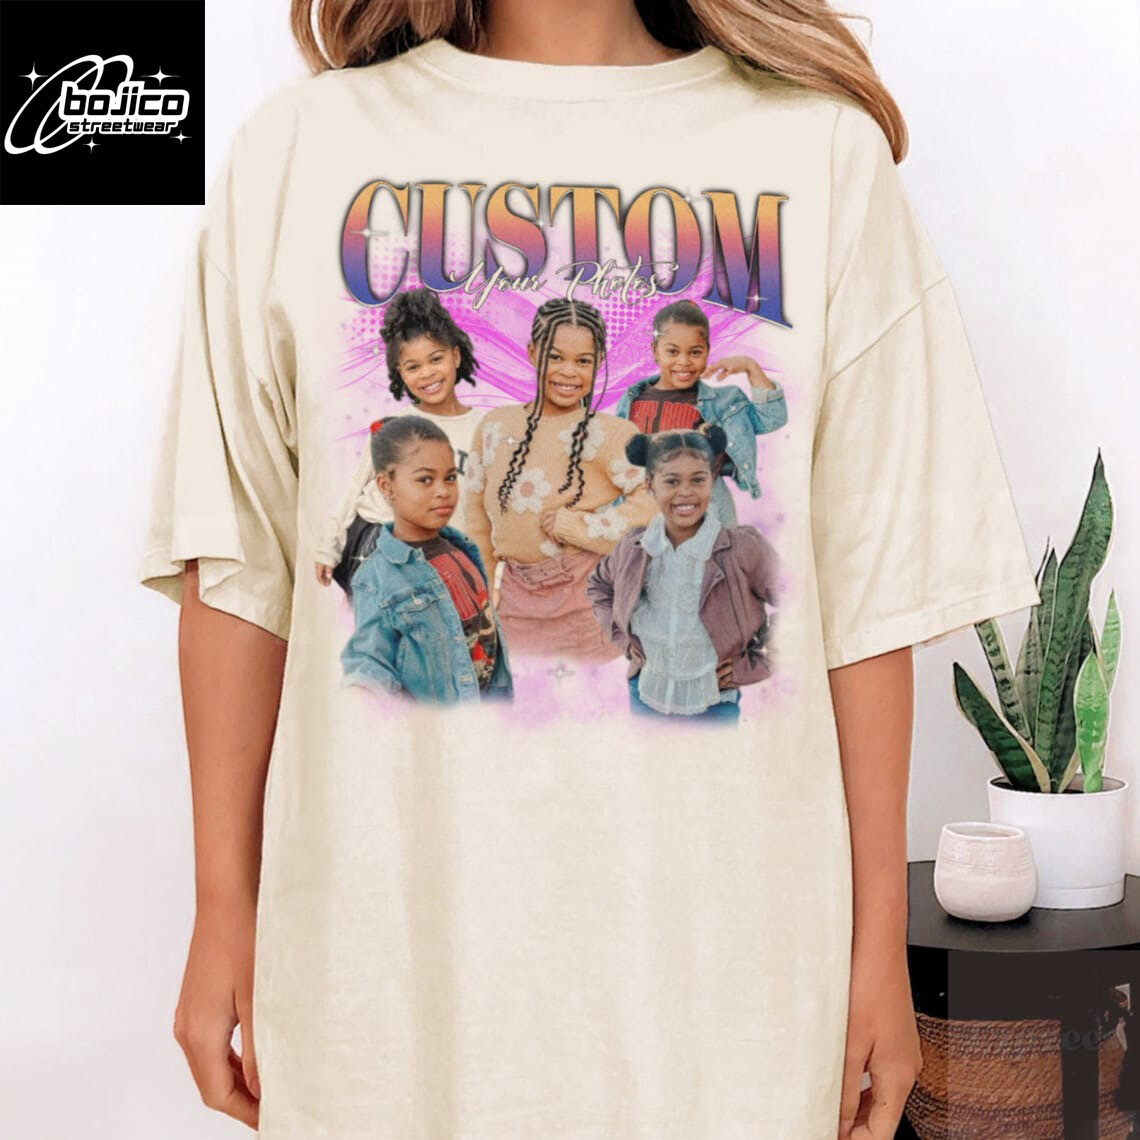 Custom Photo Rap Tee, Customize Text Images Idea Tee, Custom Photo - Vintage Graphic 90s Tshirt, Insert Your Design Here